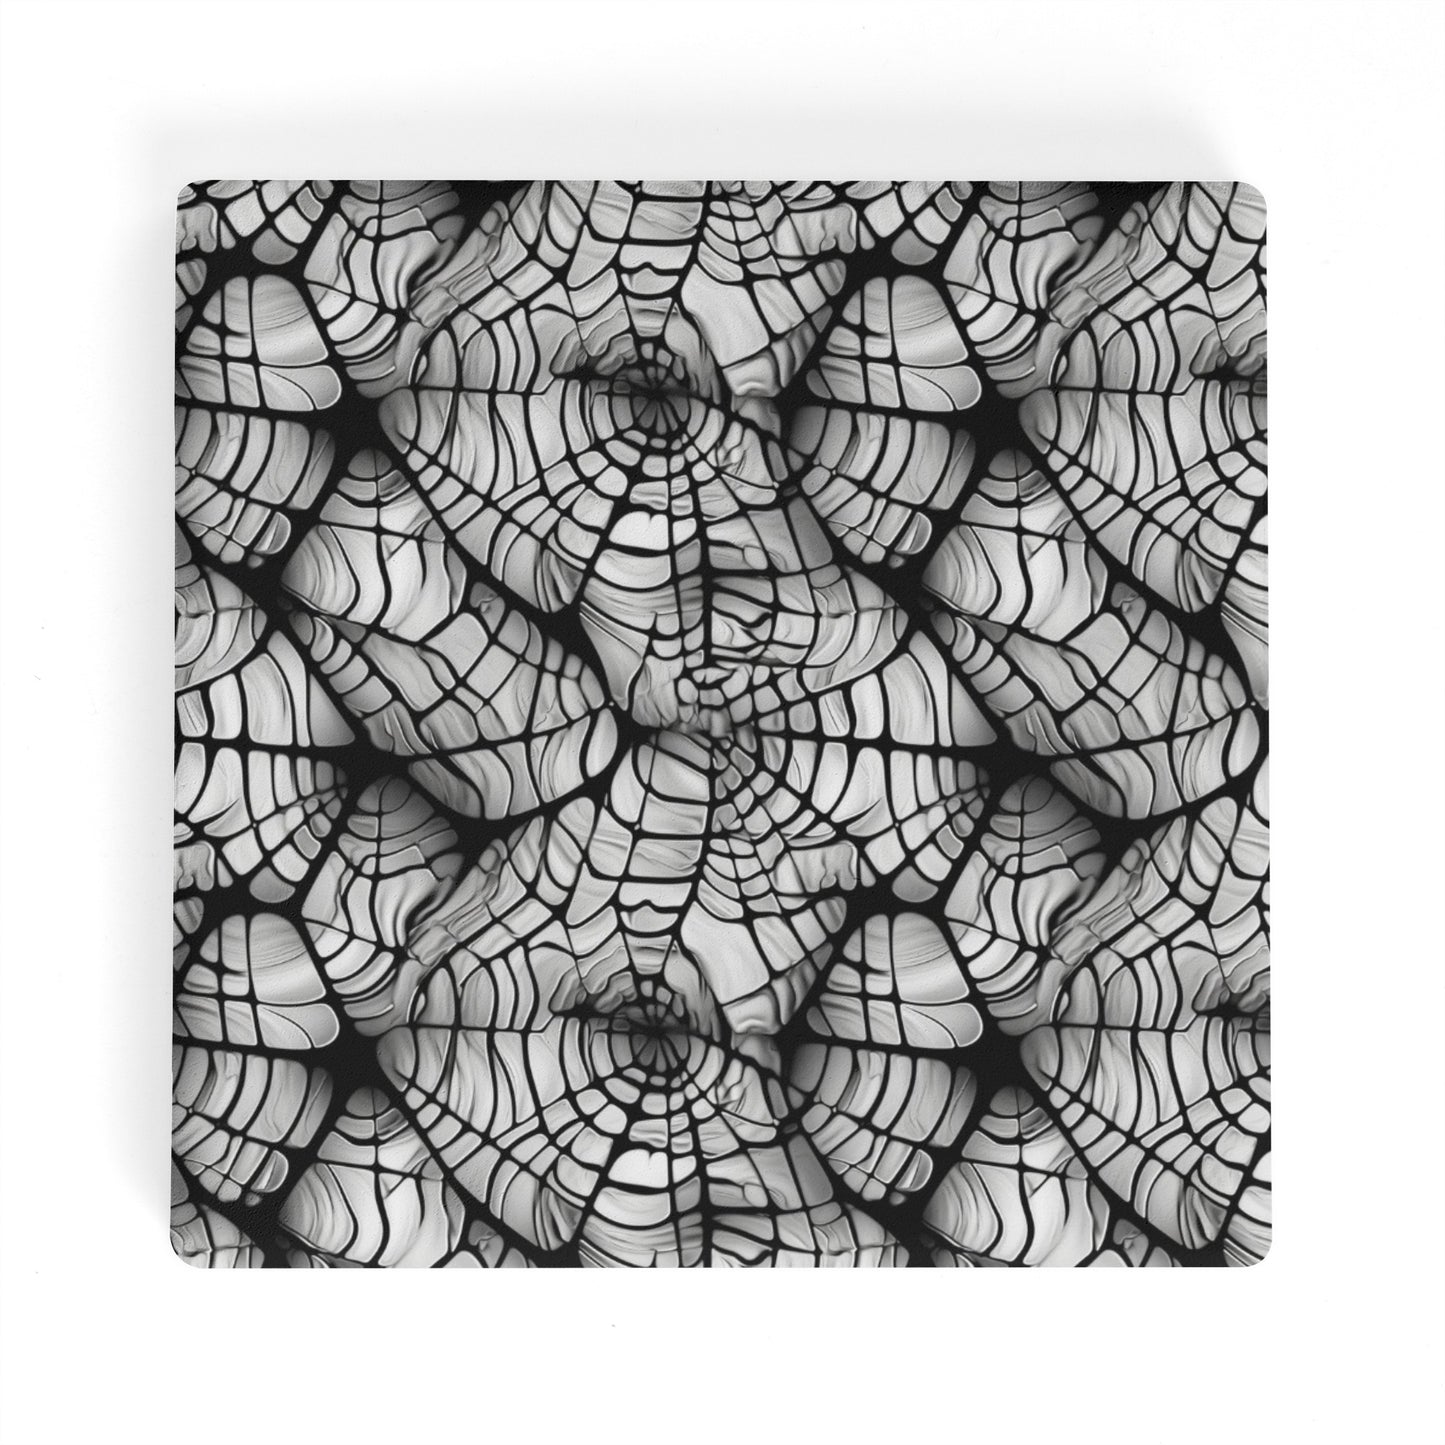 Spider Webs Square Ceramic Coasters (4 Pack)